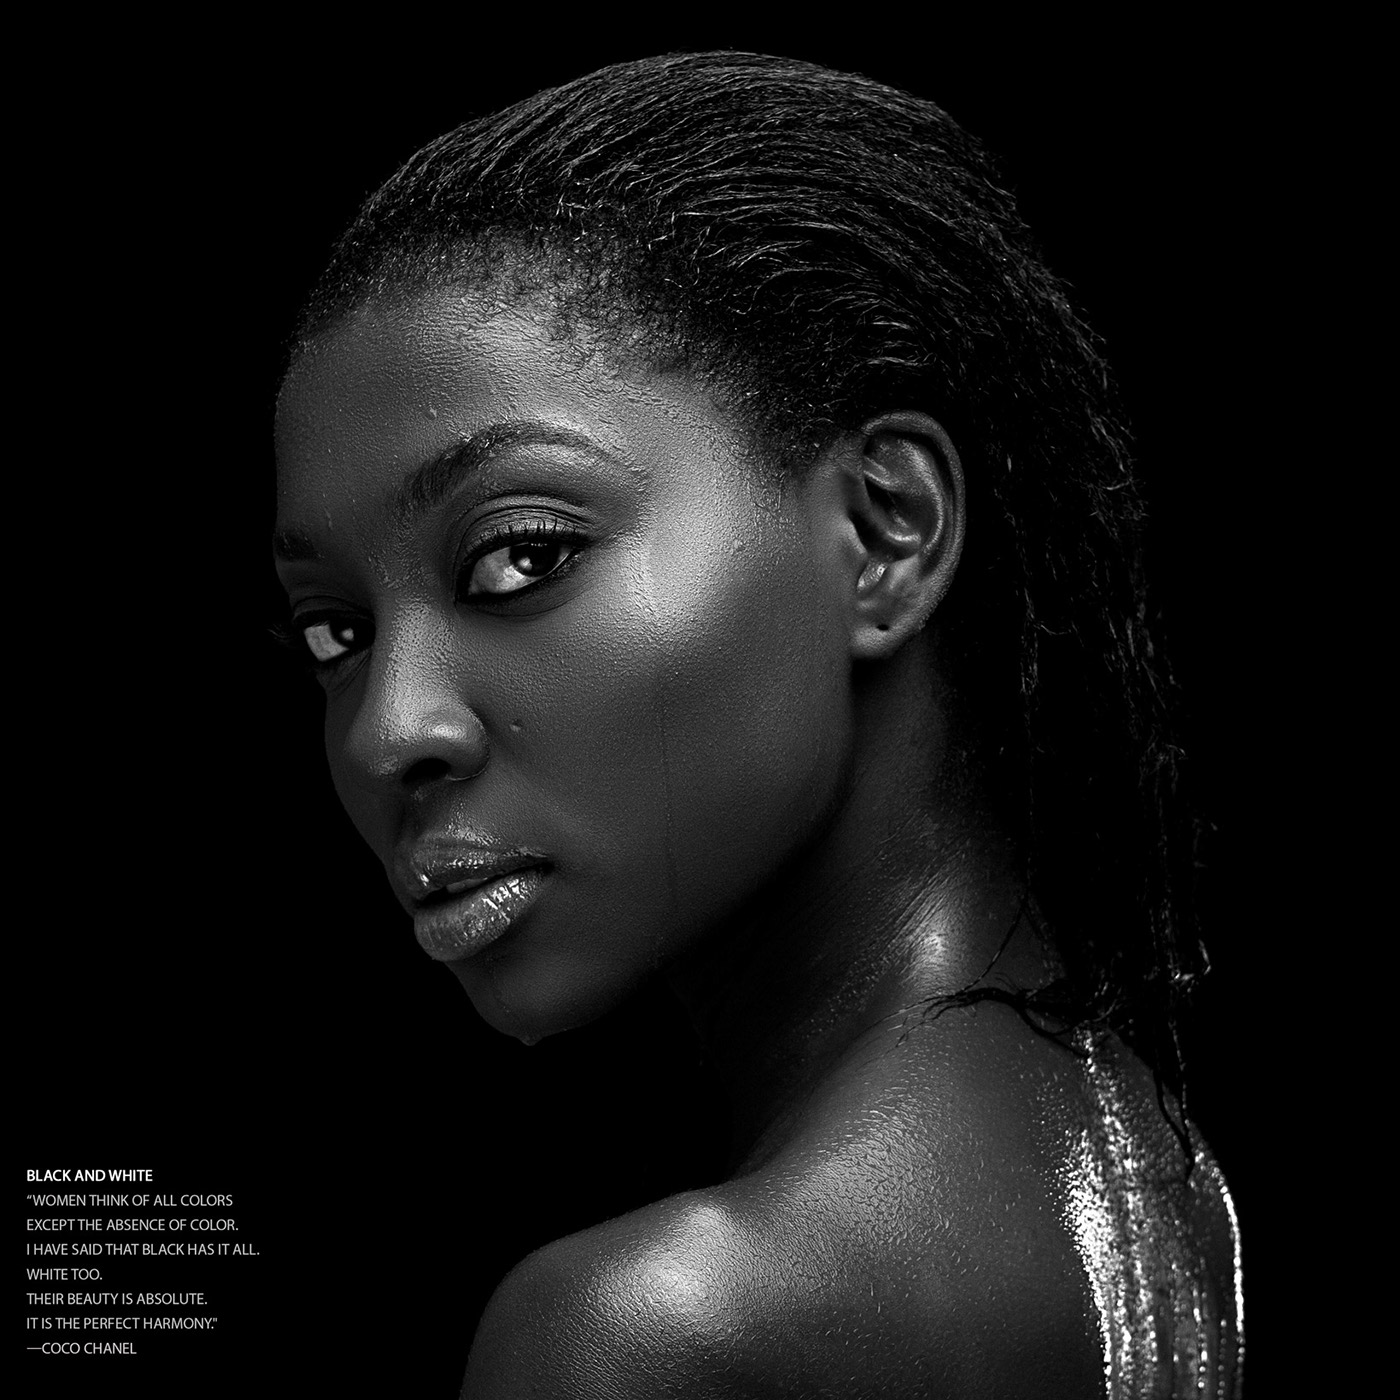 alfe alfestudios Photography  retouch melanin black natural beauty nigeria africa